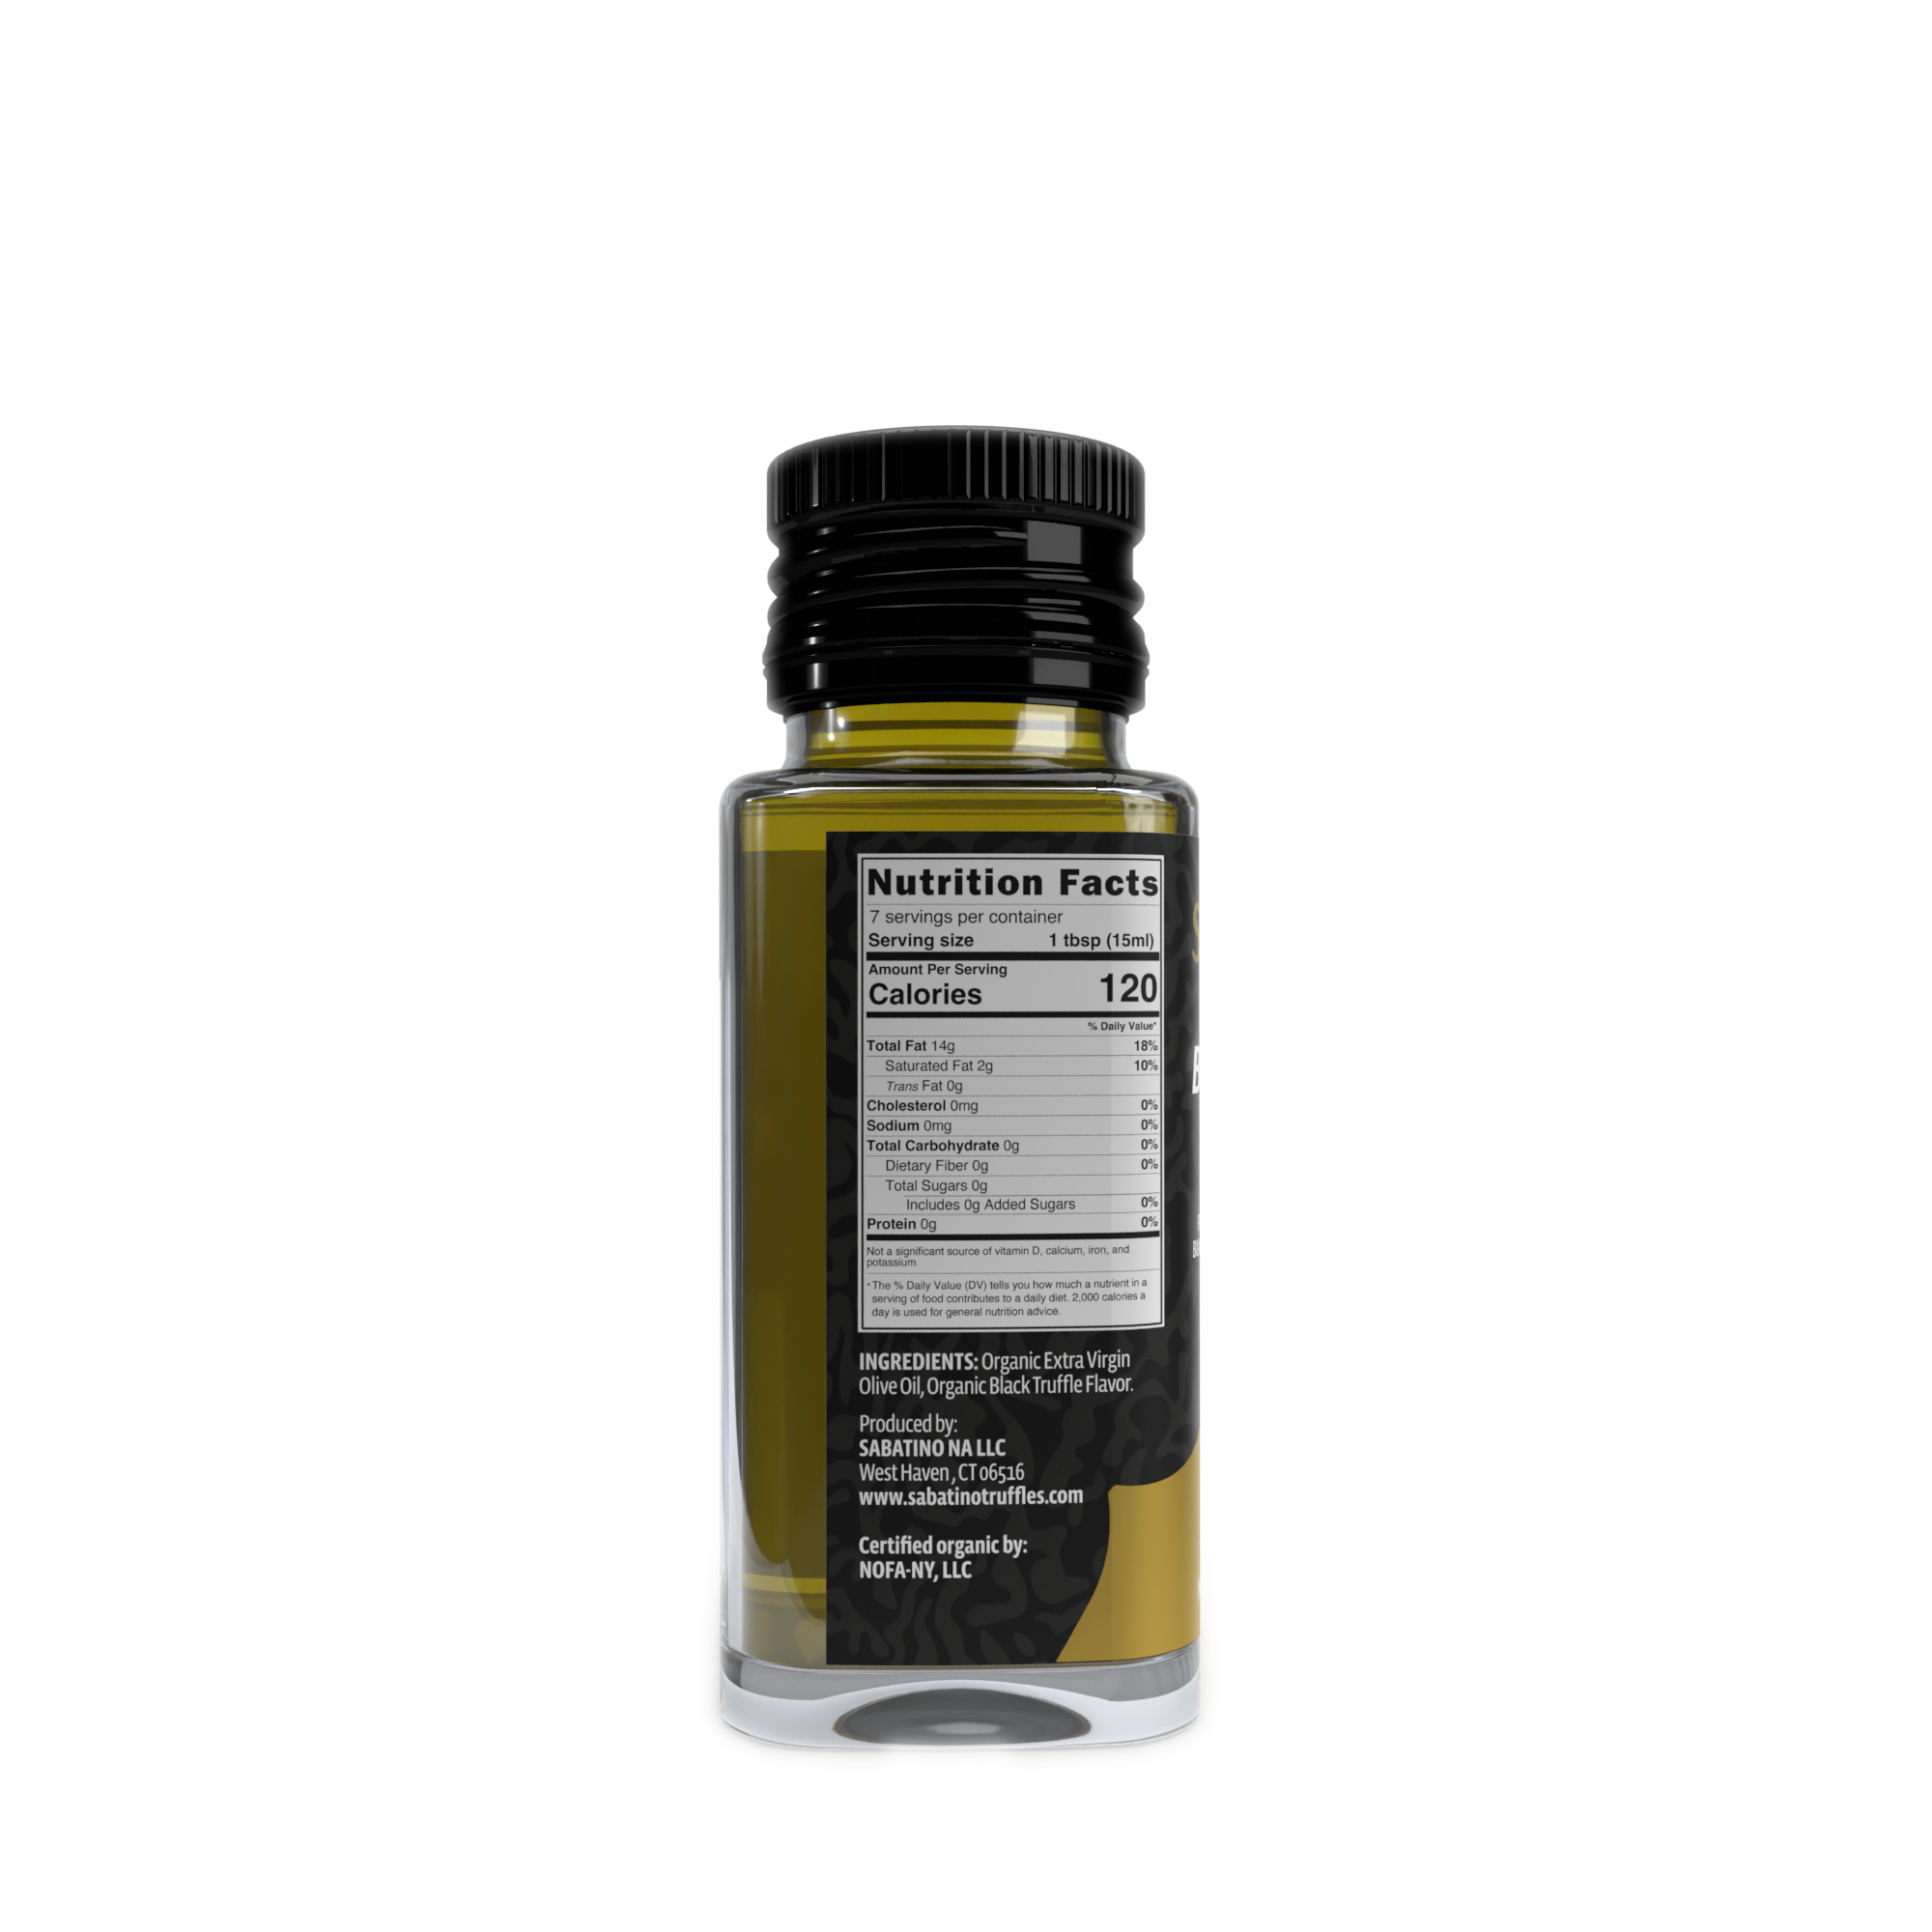 USDA Organic Black Truffle Infused Oil - 3.4 fl oz side of pot